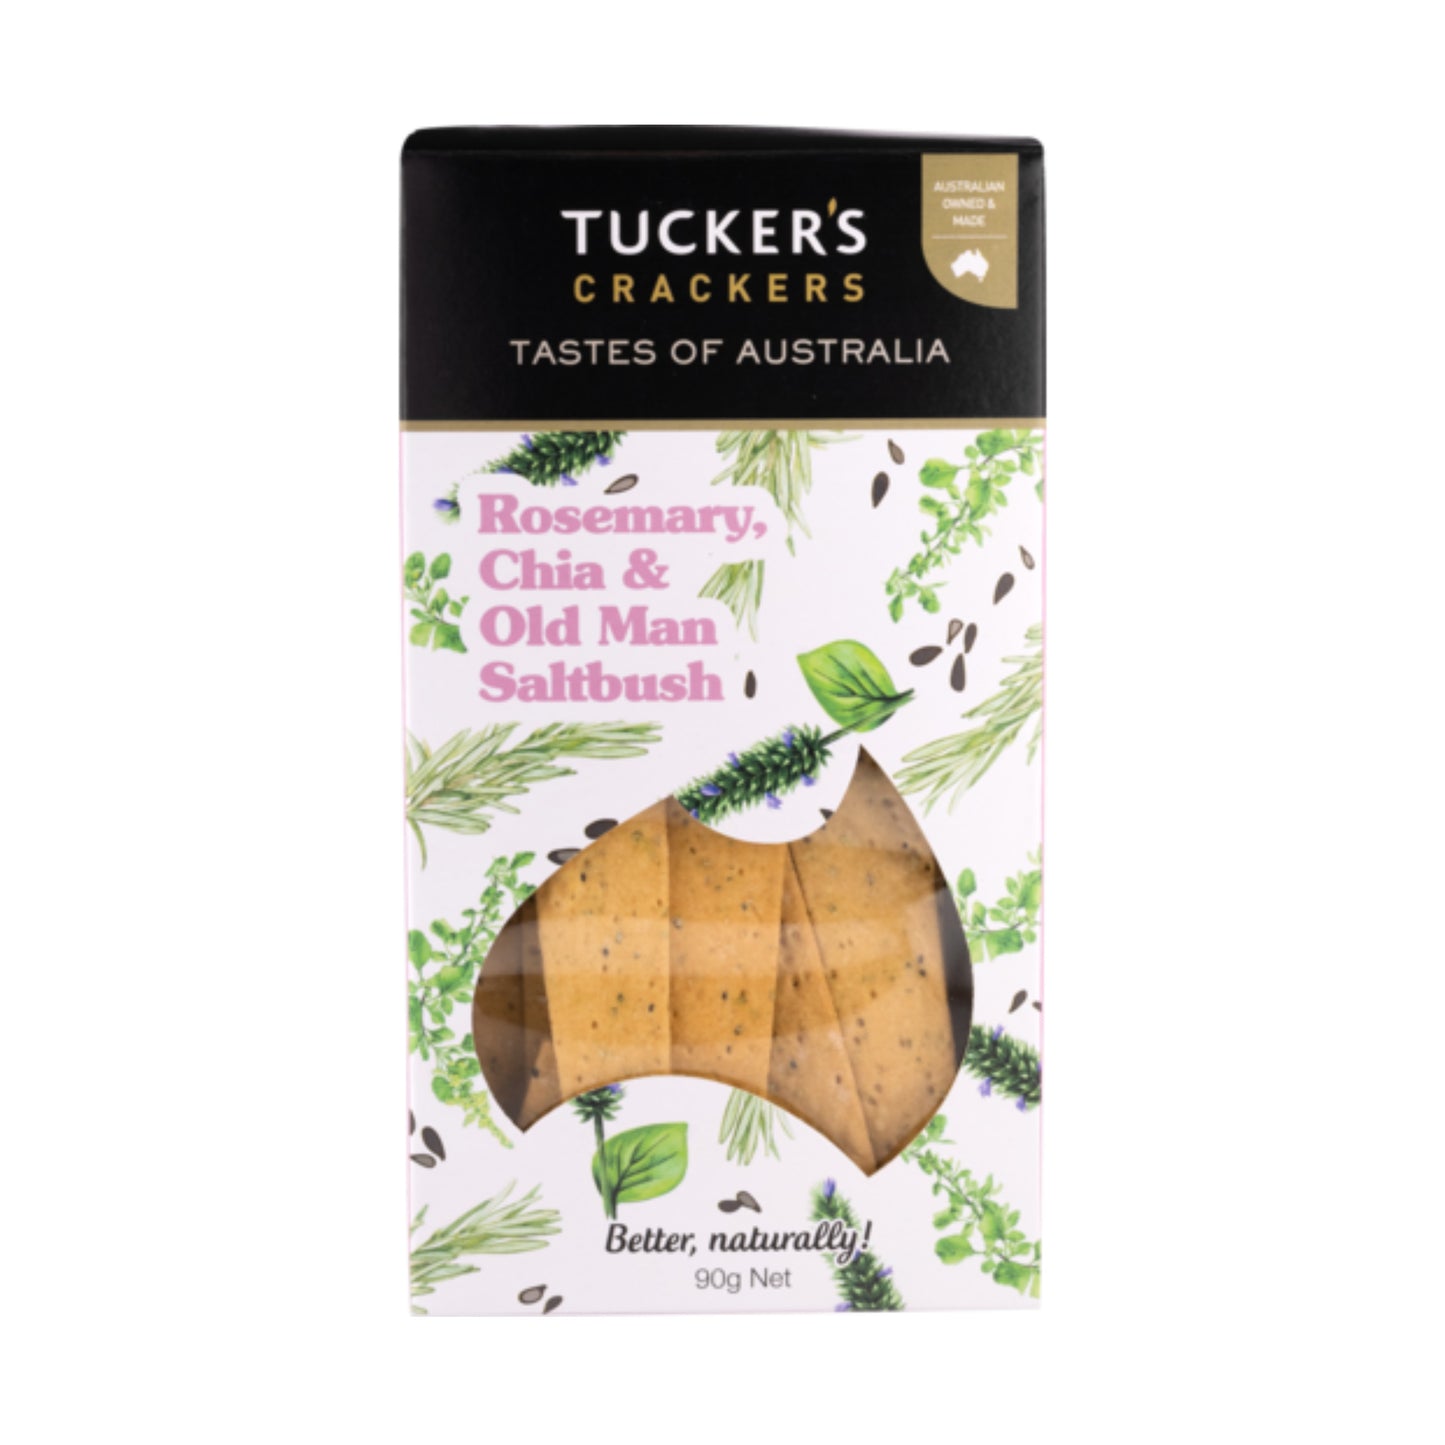 Crackers - Tuckers Natural - Rosemary Chia & Saltbush - 90g